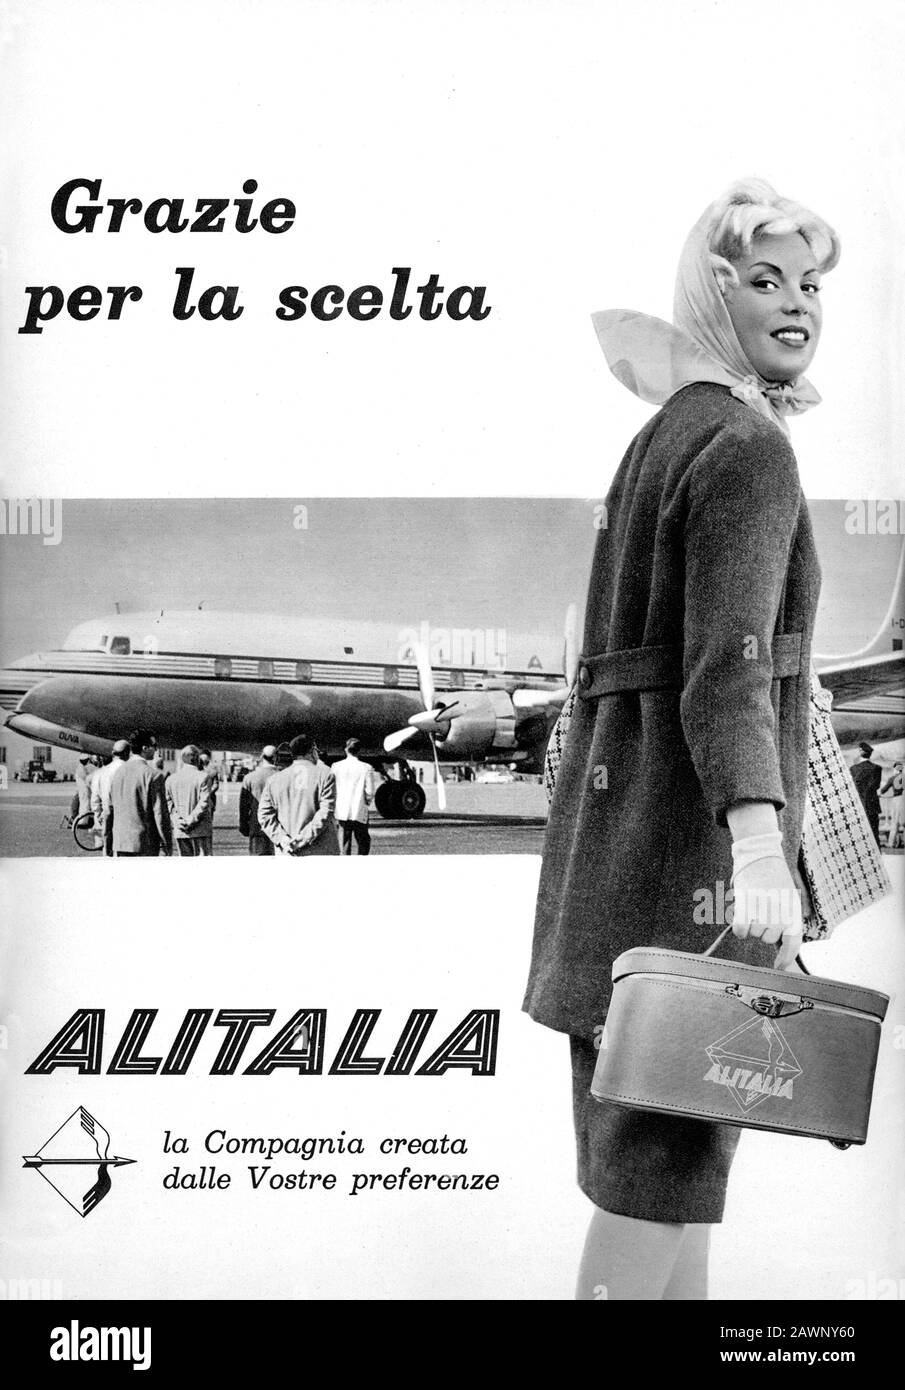 Alitalia poster Black and White Stock Photos & Images - Alamy